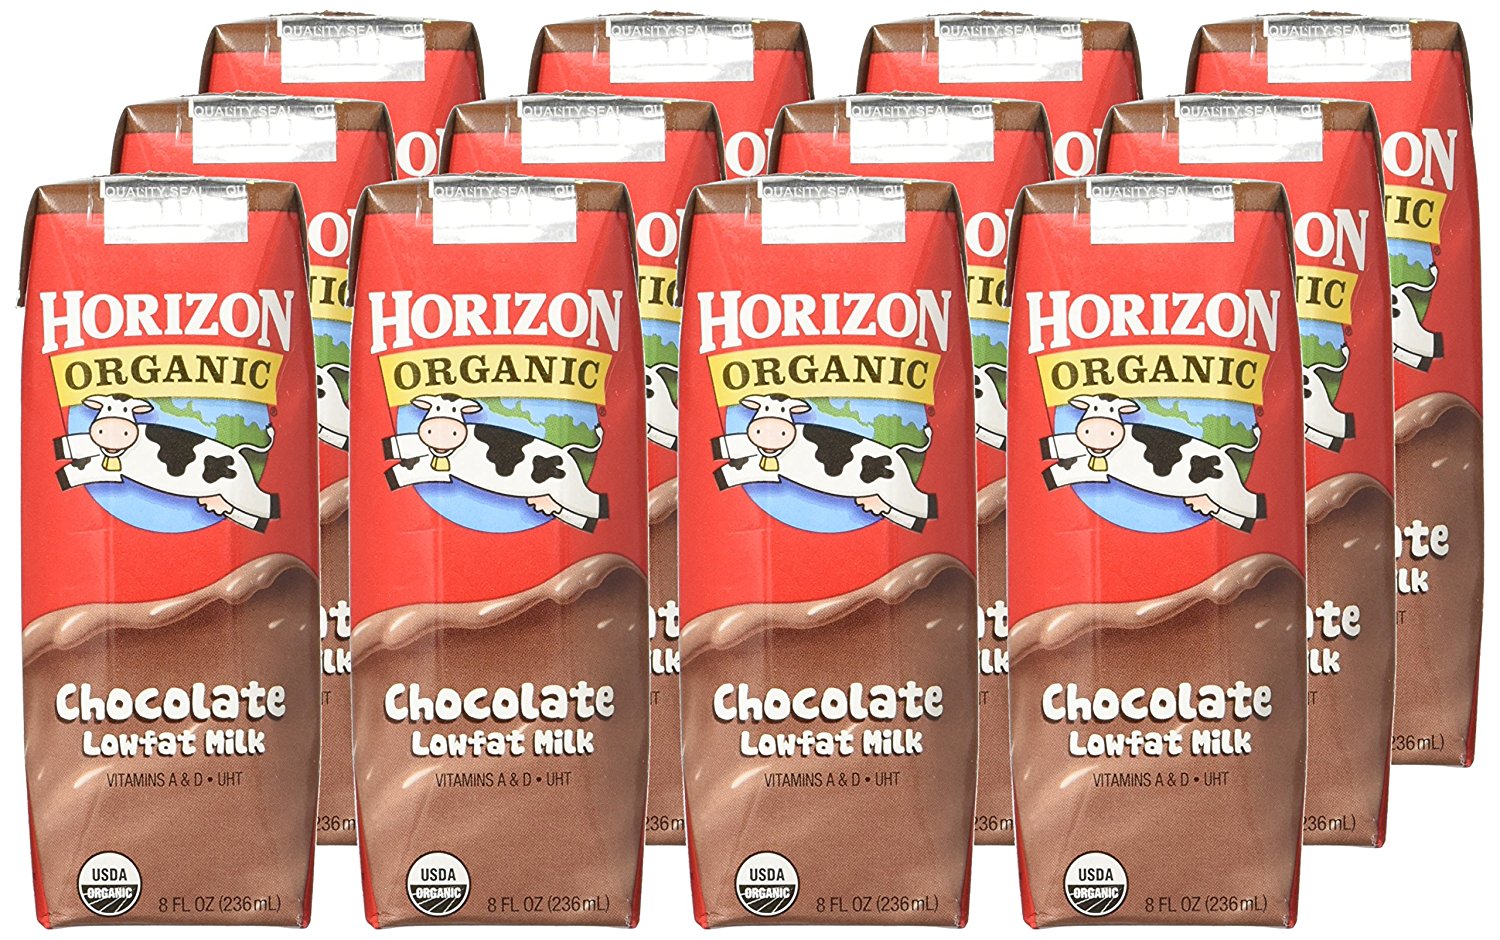 Horizon Organic Low Fat Organic Milk Box (Chocolate) 12 Pack Only $9.67!